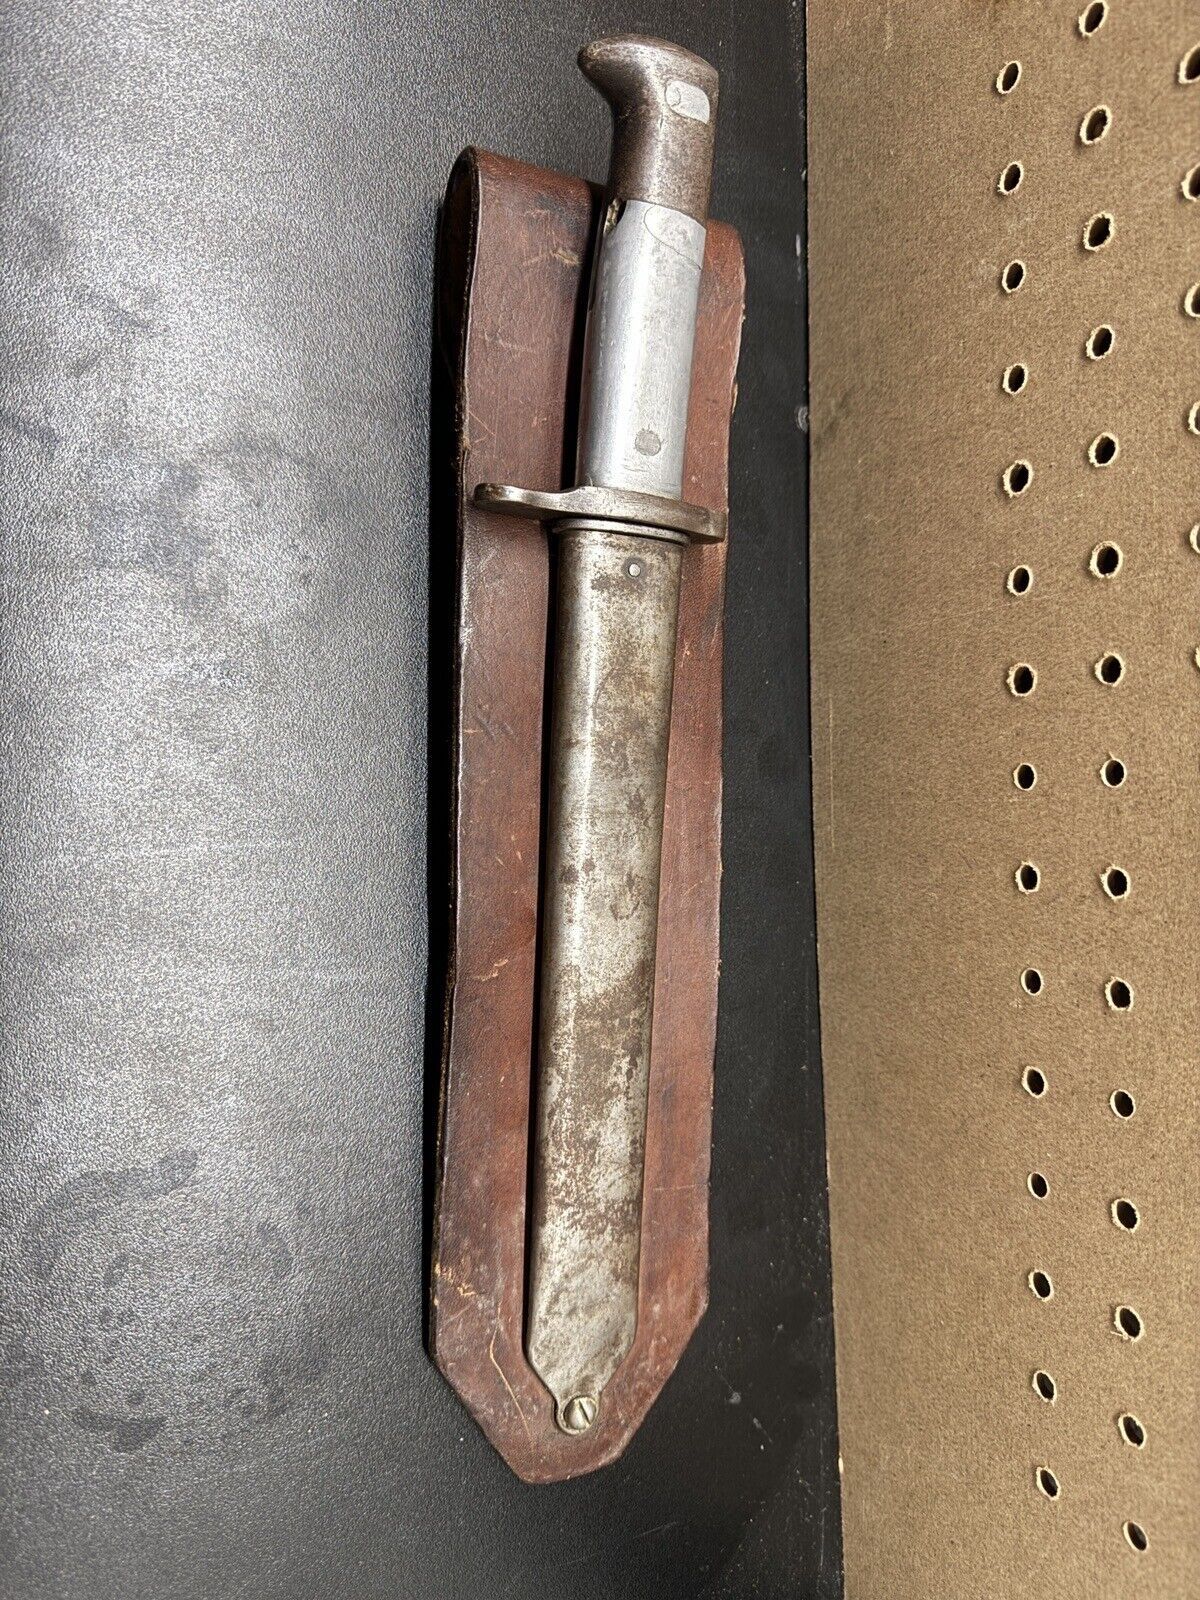 MODIFIED 1892 krag-jørgensen bayonet